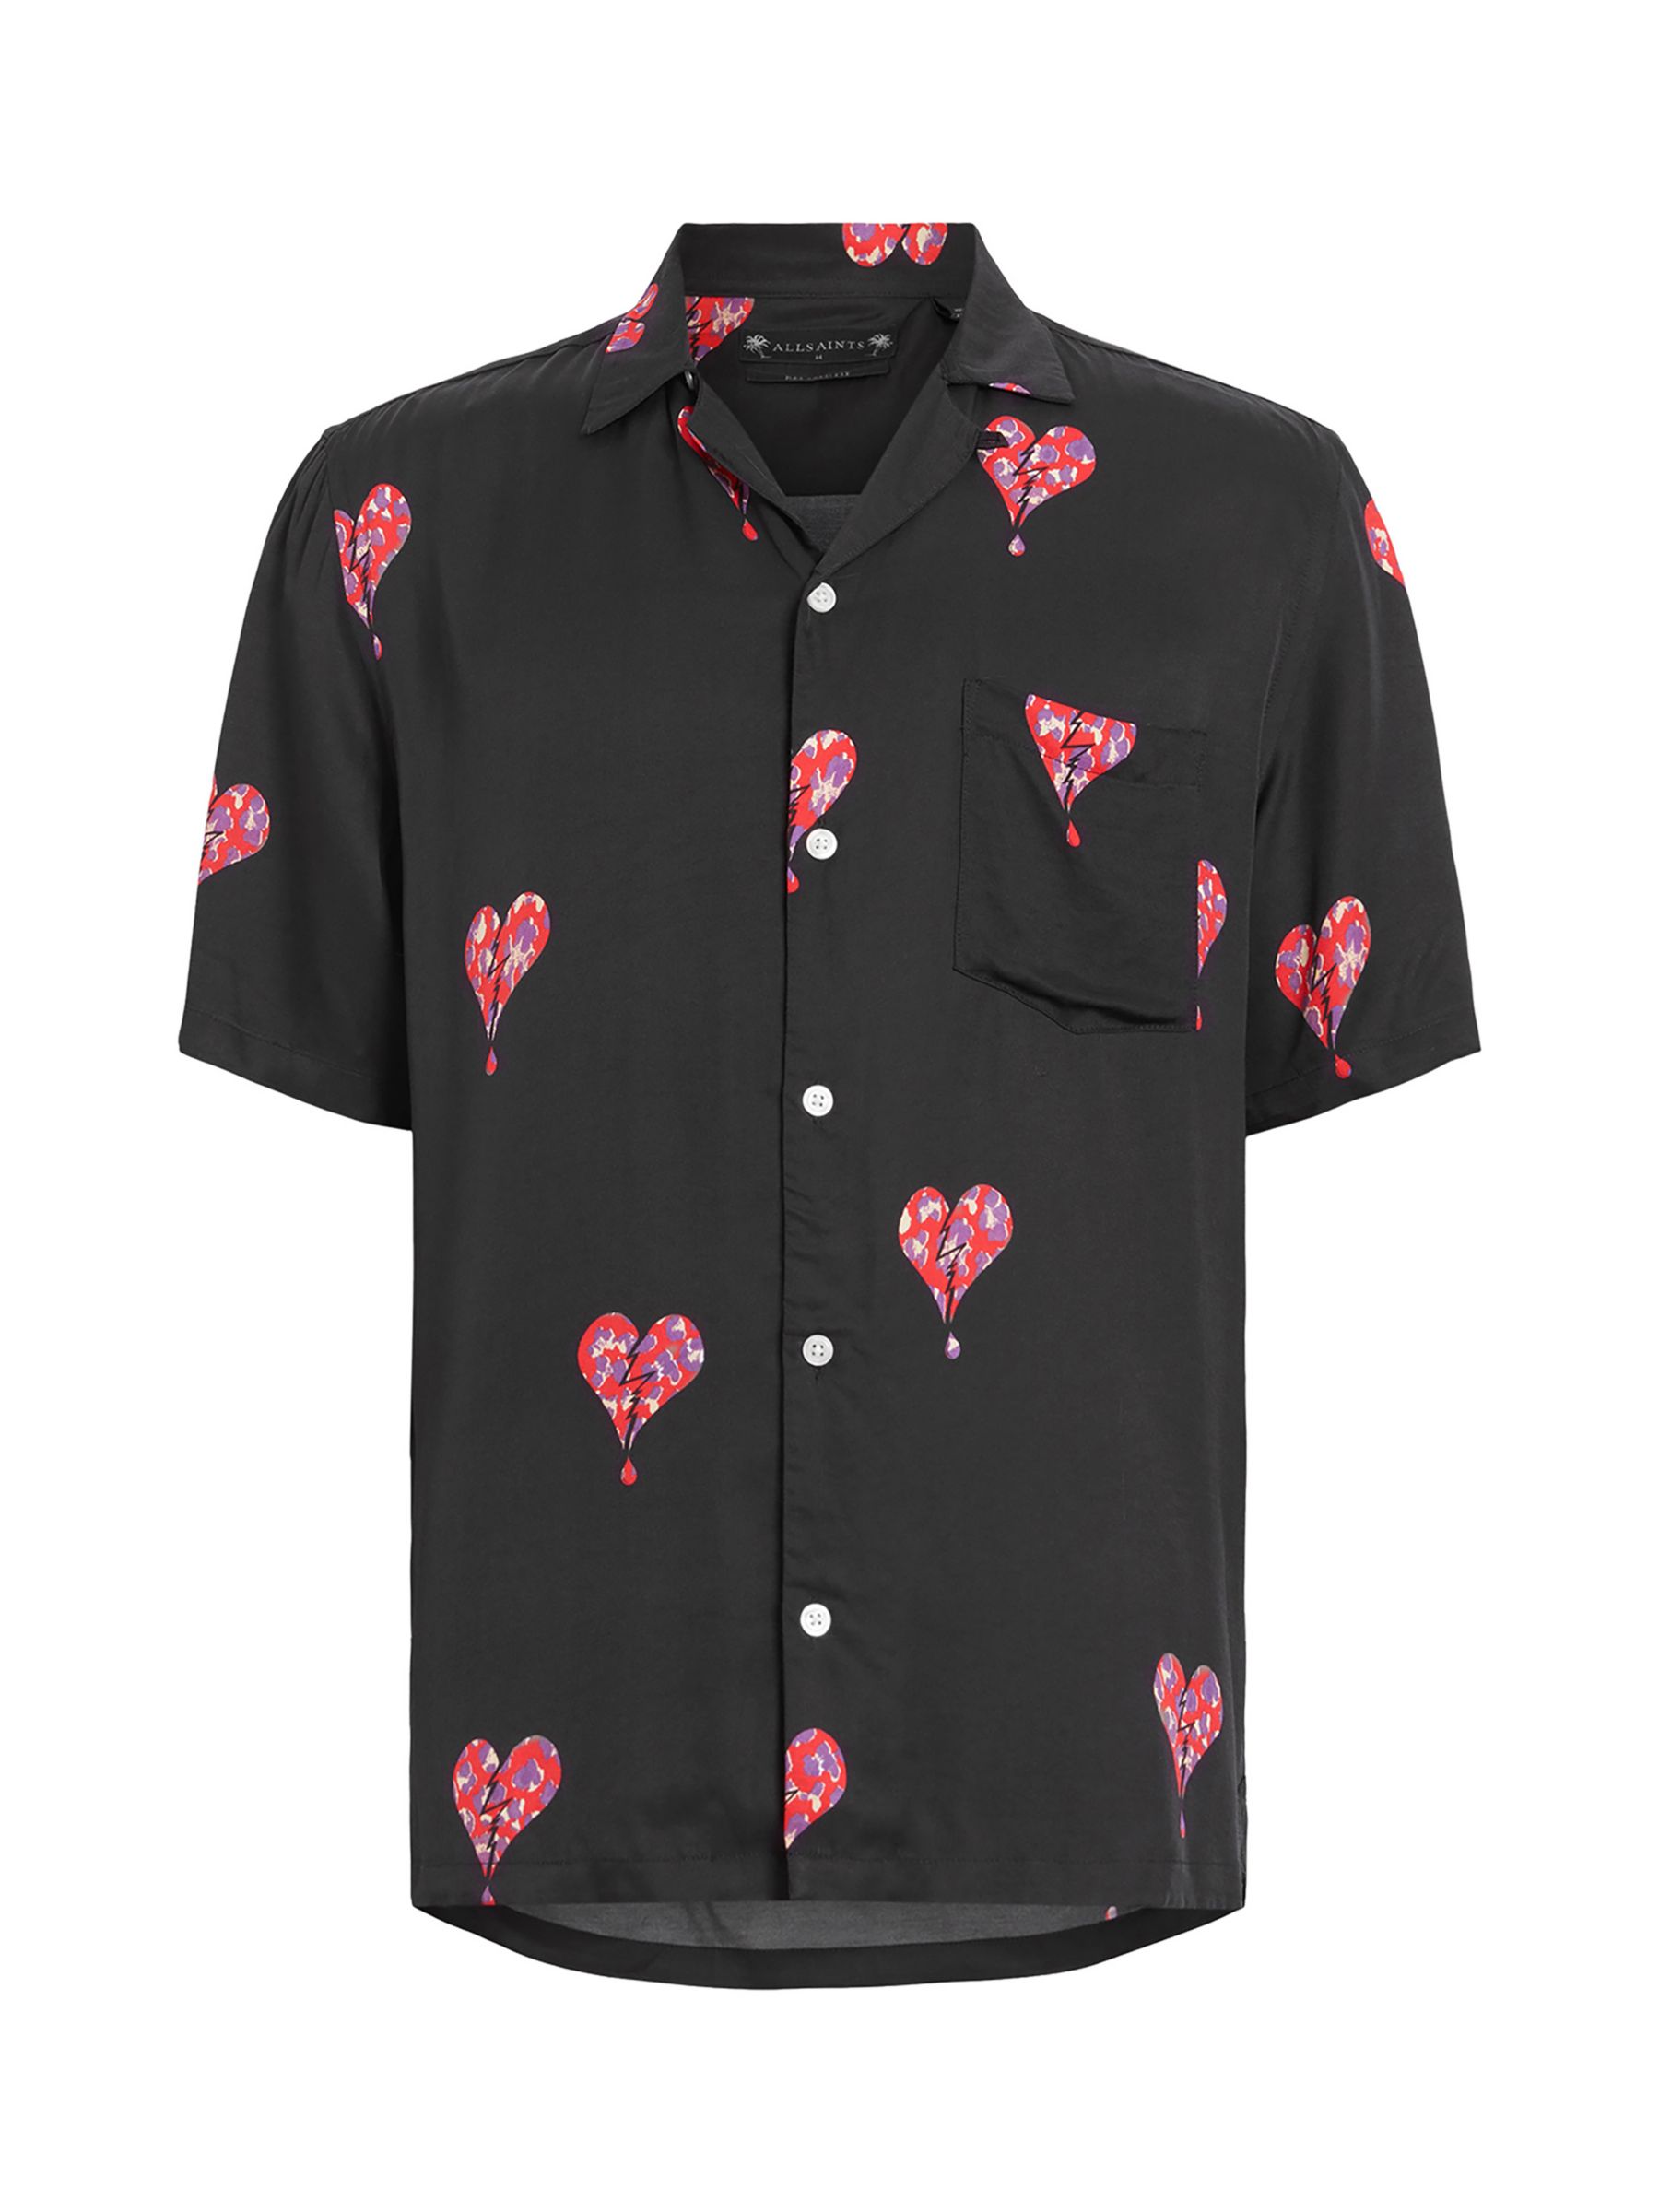 AllSaints Ikuma Breakup Short Sleeve Shirt, Black/Multi, XXL